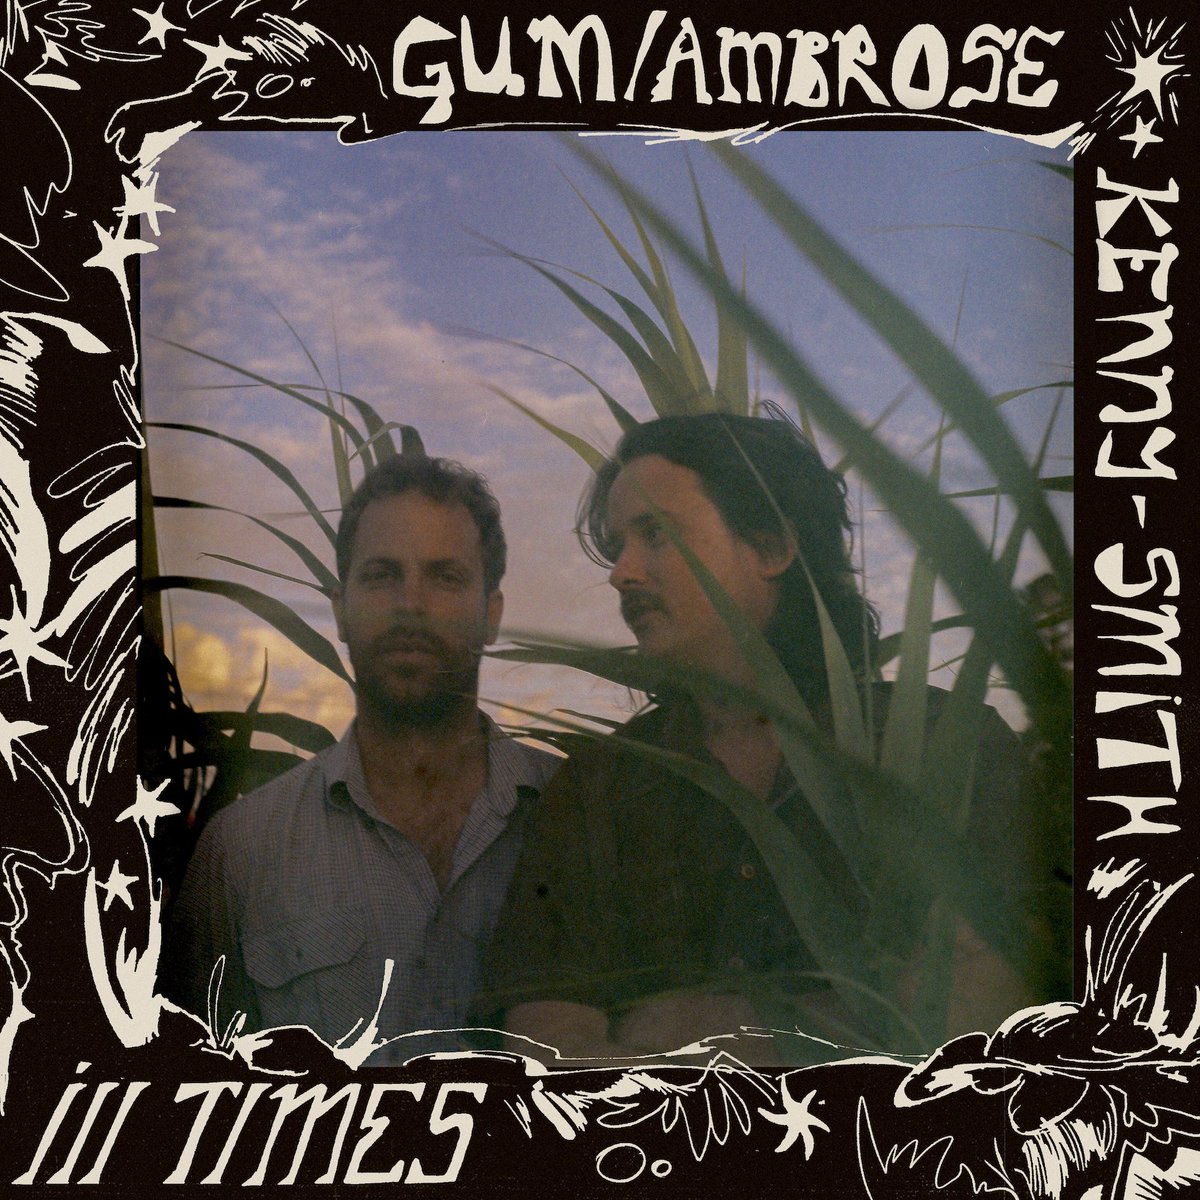 GUM / Ambrose Kenny-Smith (King Gizzard / Tame Impala) announce 'Ill Times' LP, share title track brooklynvegan.com/gum-ambrose-ke…